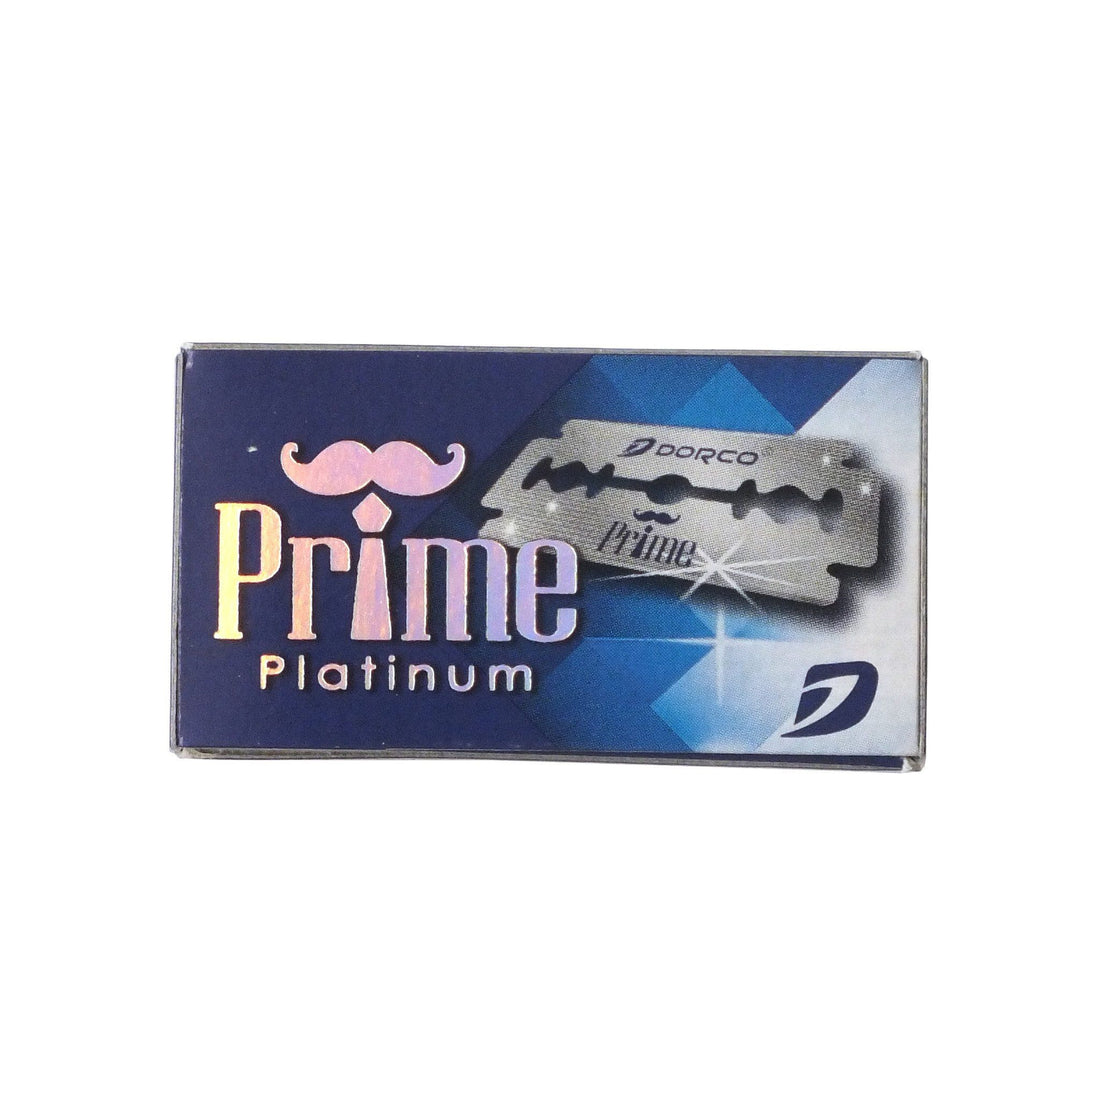 Dorco Prime Platinum Double-Edge Safety Razor Blades box